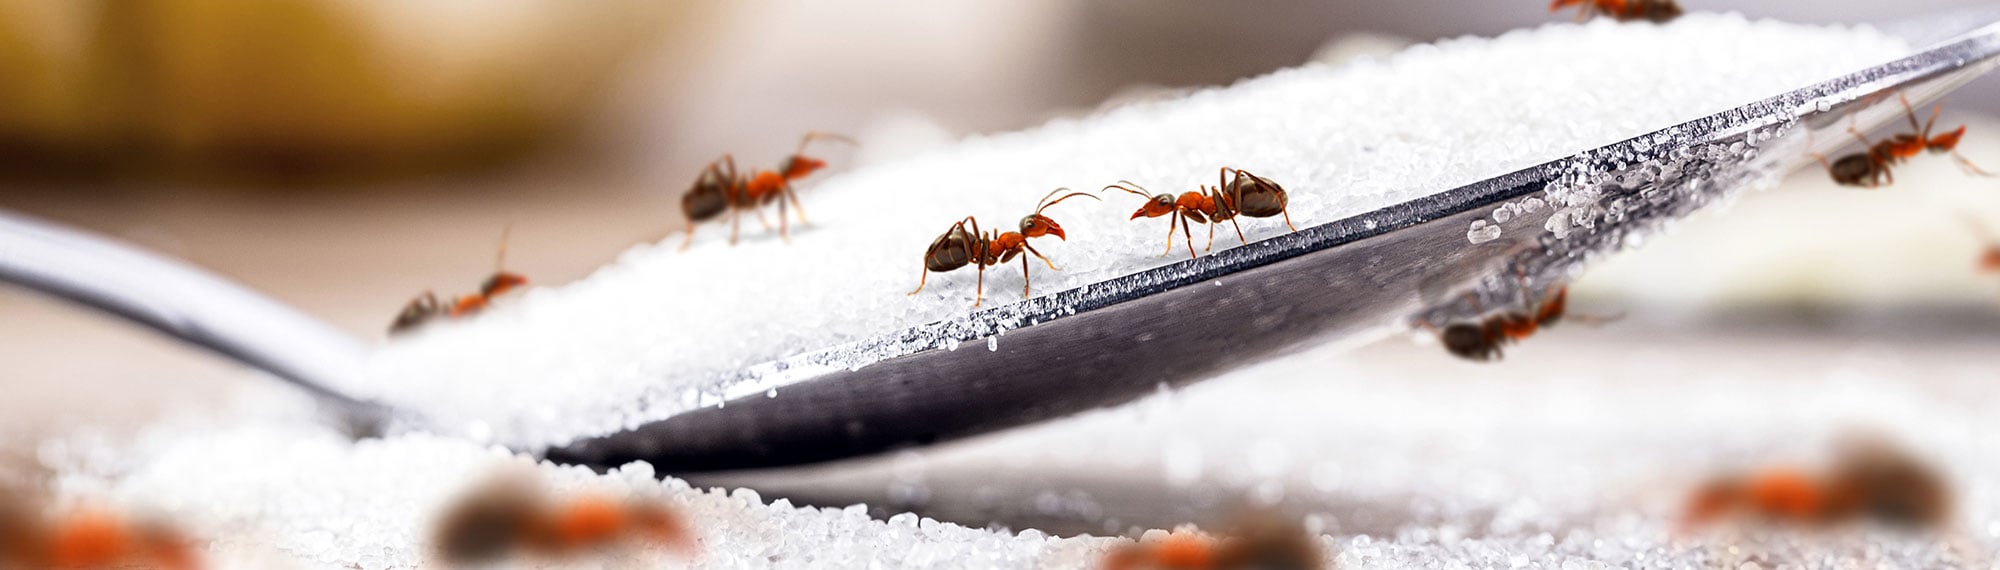 ants crawling on spoon full of sugar